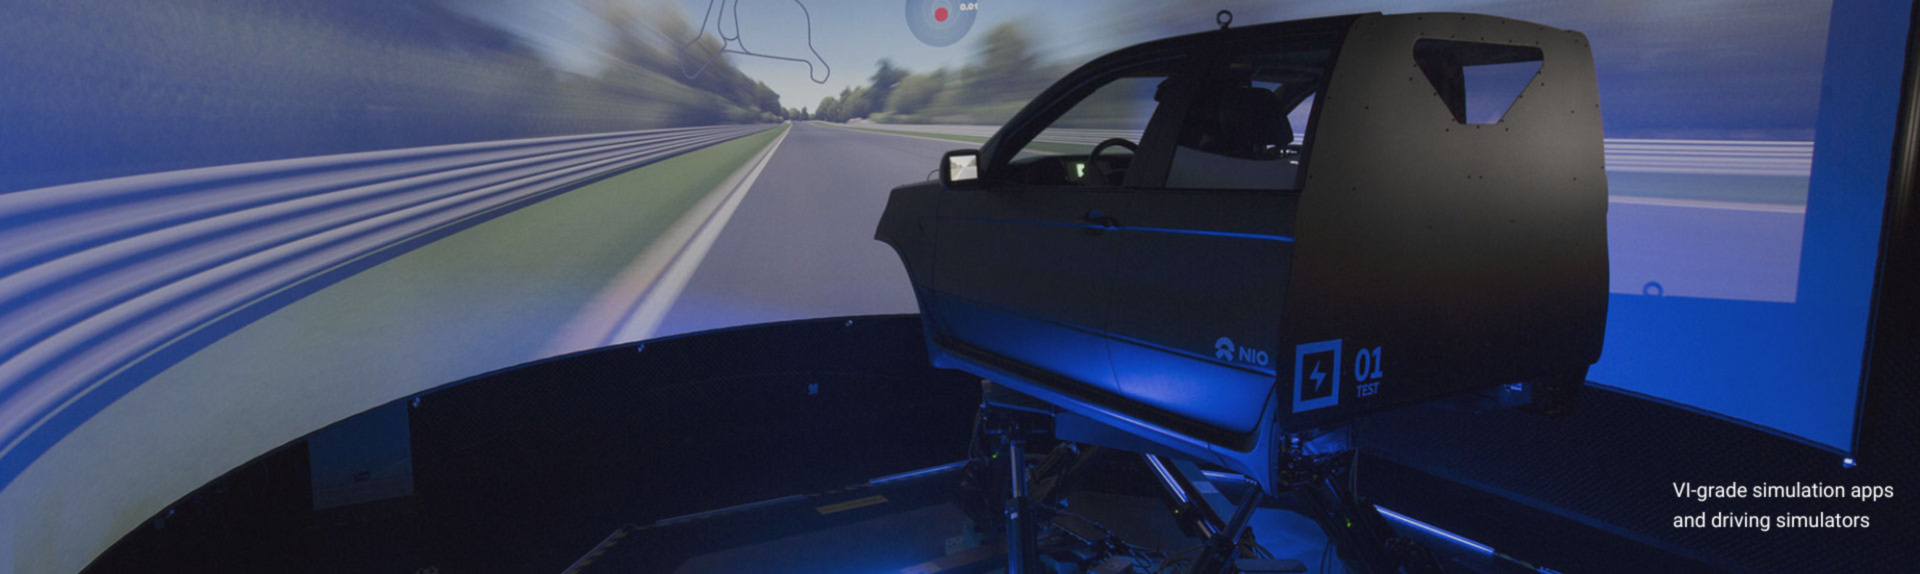 vi-grade driving simulators